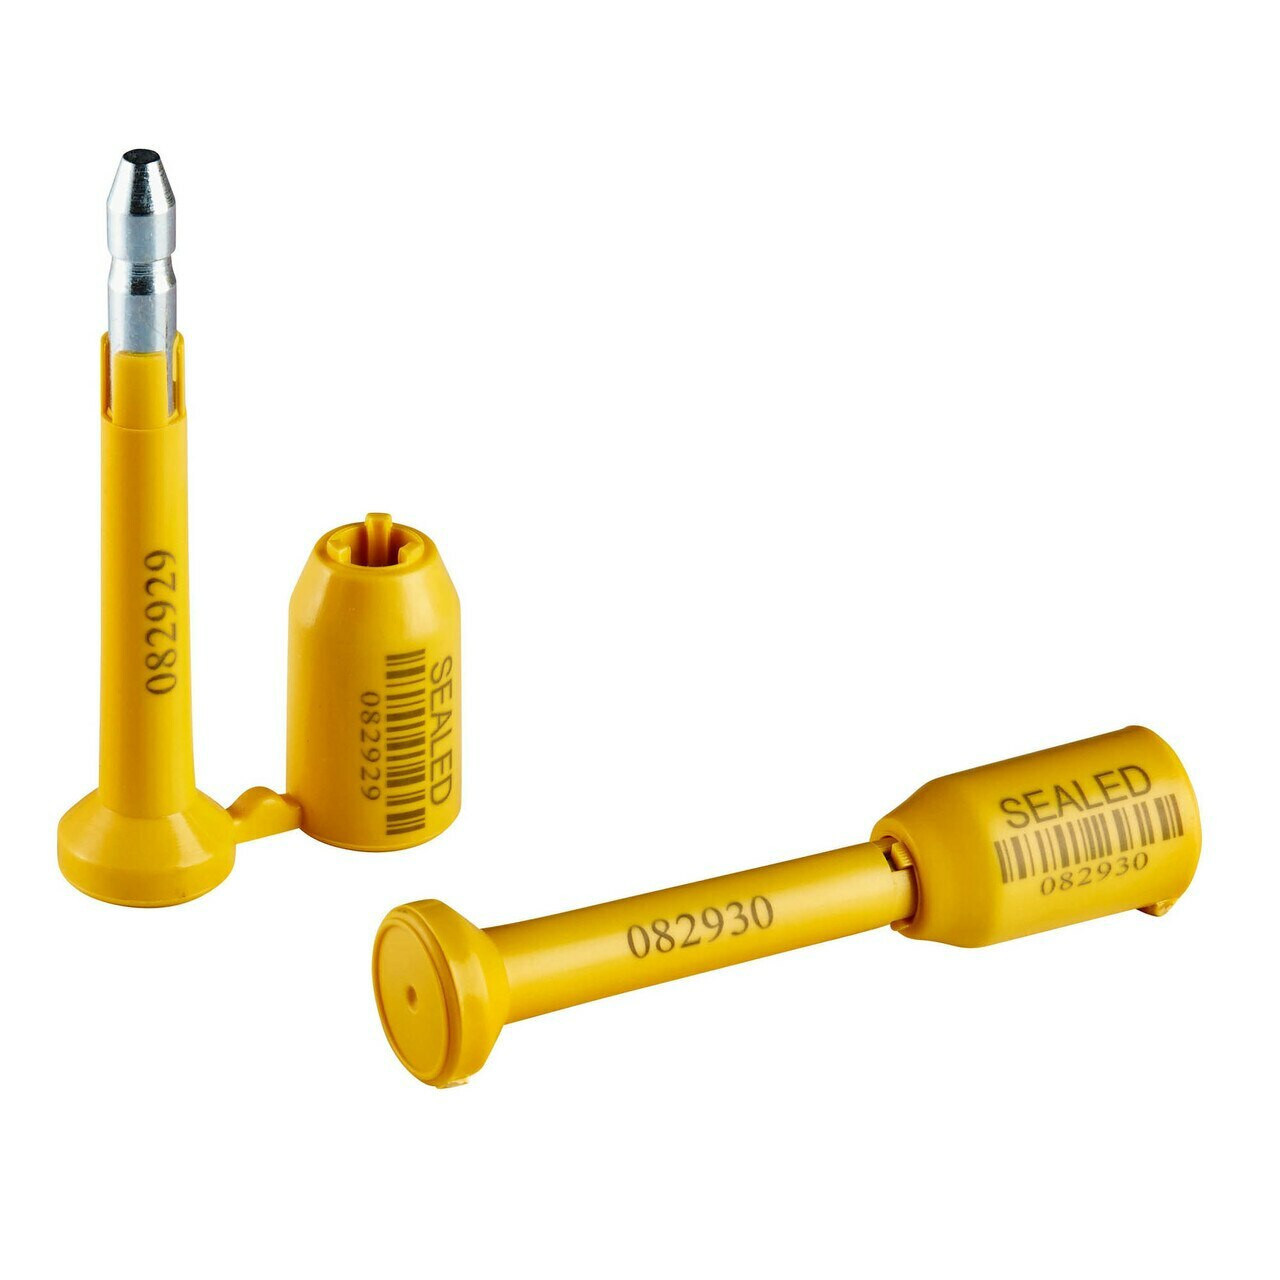 TOTALPACK® High Security Truck Steel Seals Pin Locks - Yellow, 10